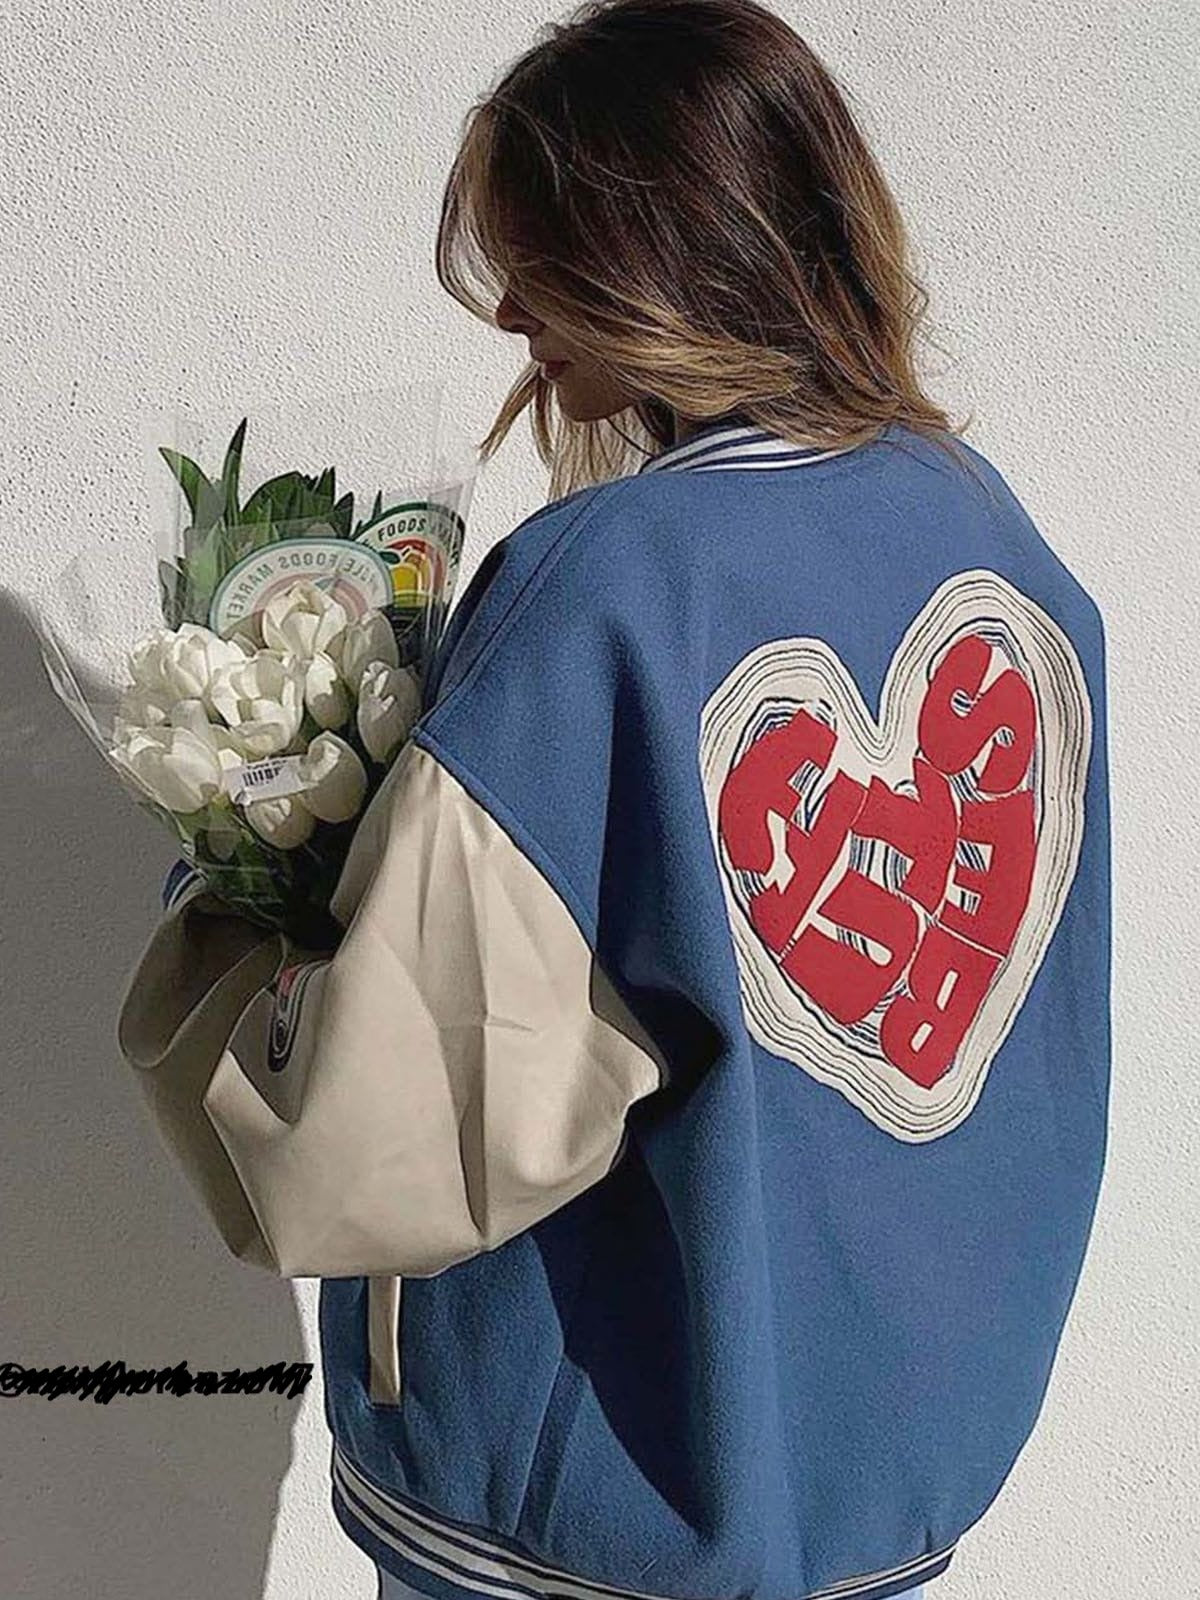 Majesda® - Letter Love Foaming Varsity Jacket outfit ideas, streetwear fashion - majesda.com